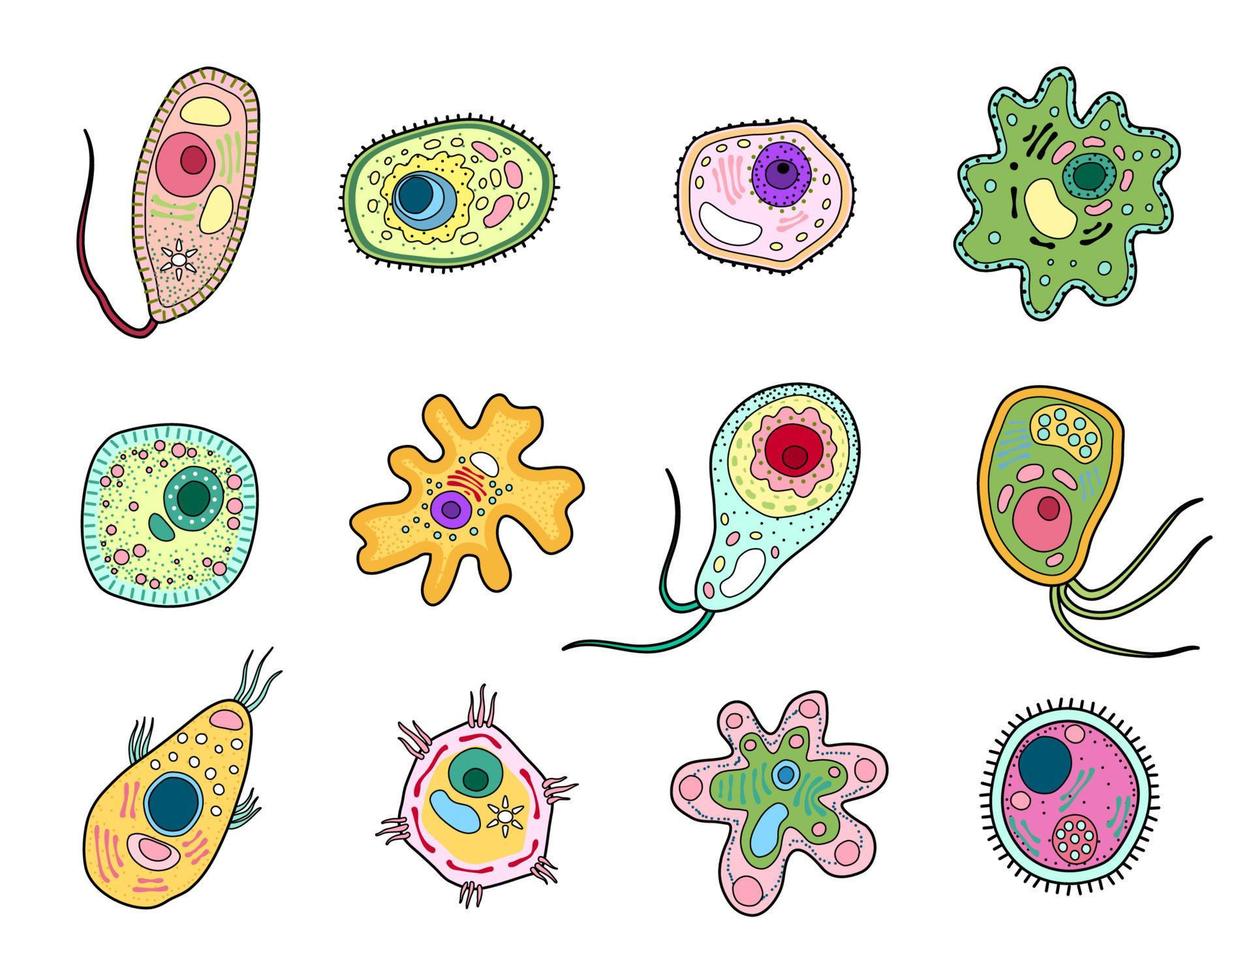 Protista, protozoa or amoeba microorganism cells vector